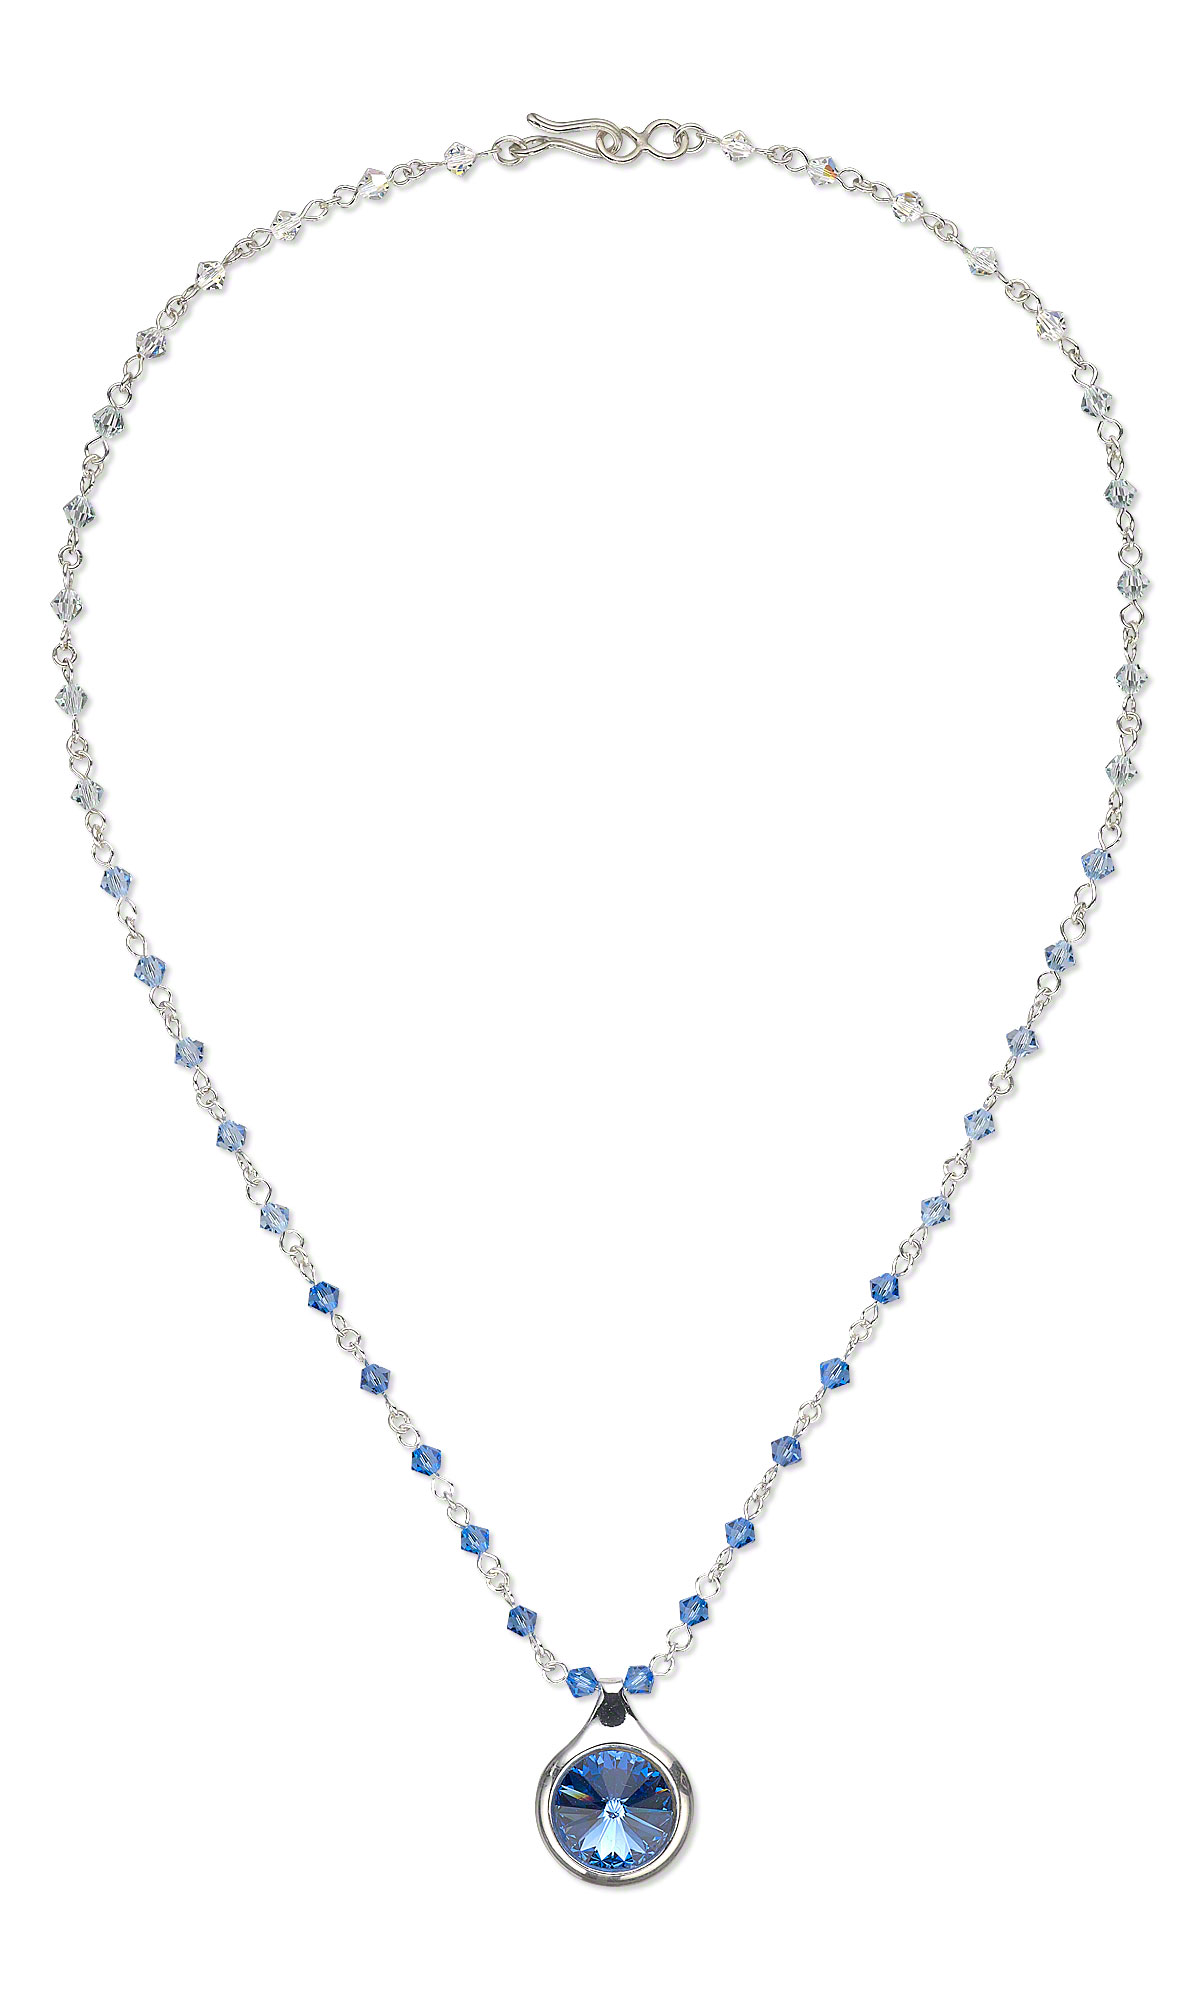 Jewelry Design - Single-Strand Necklace with Swarovski Crystal Beads ...